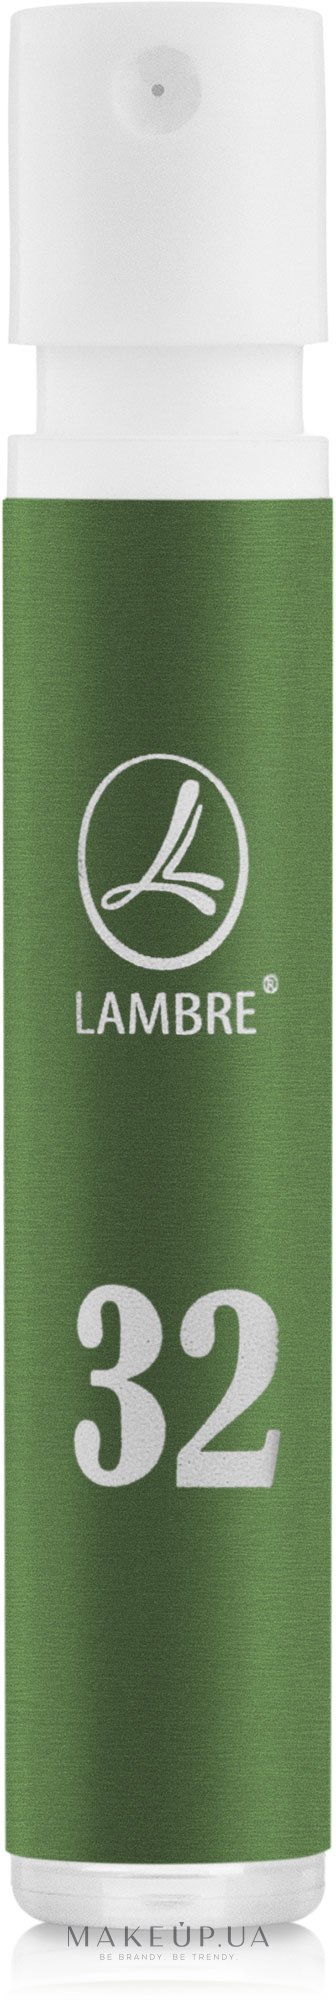 Lambre 32 - Туалетна вода (пробник) — фото 1.2ml